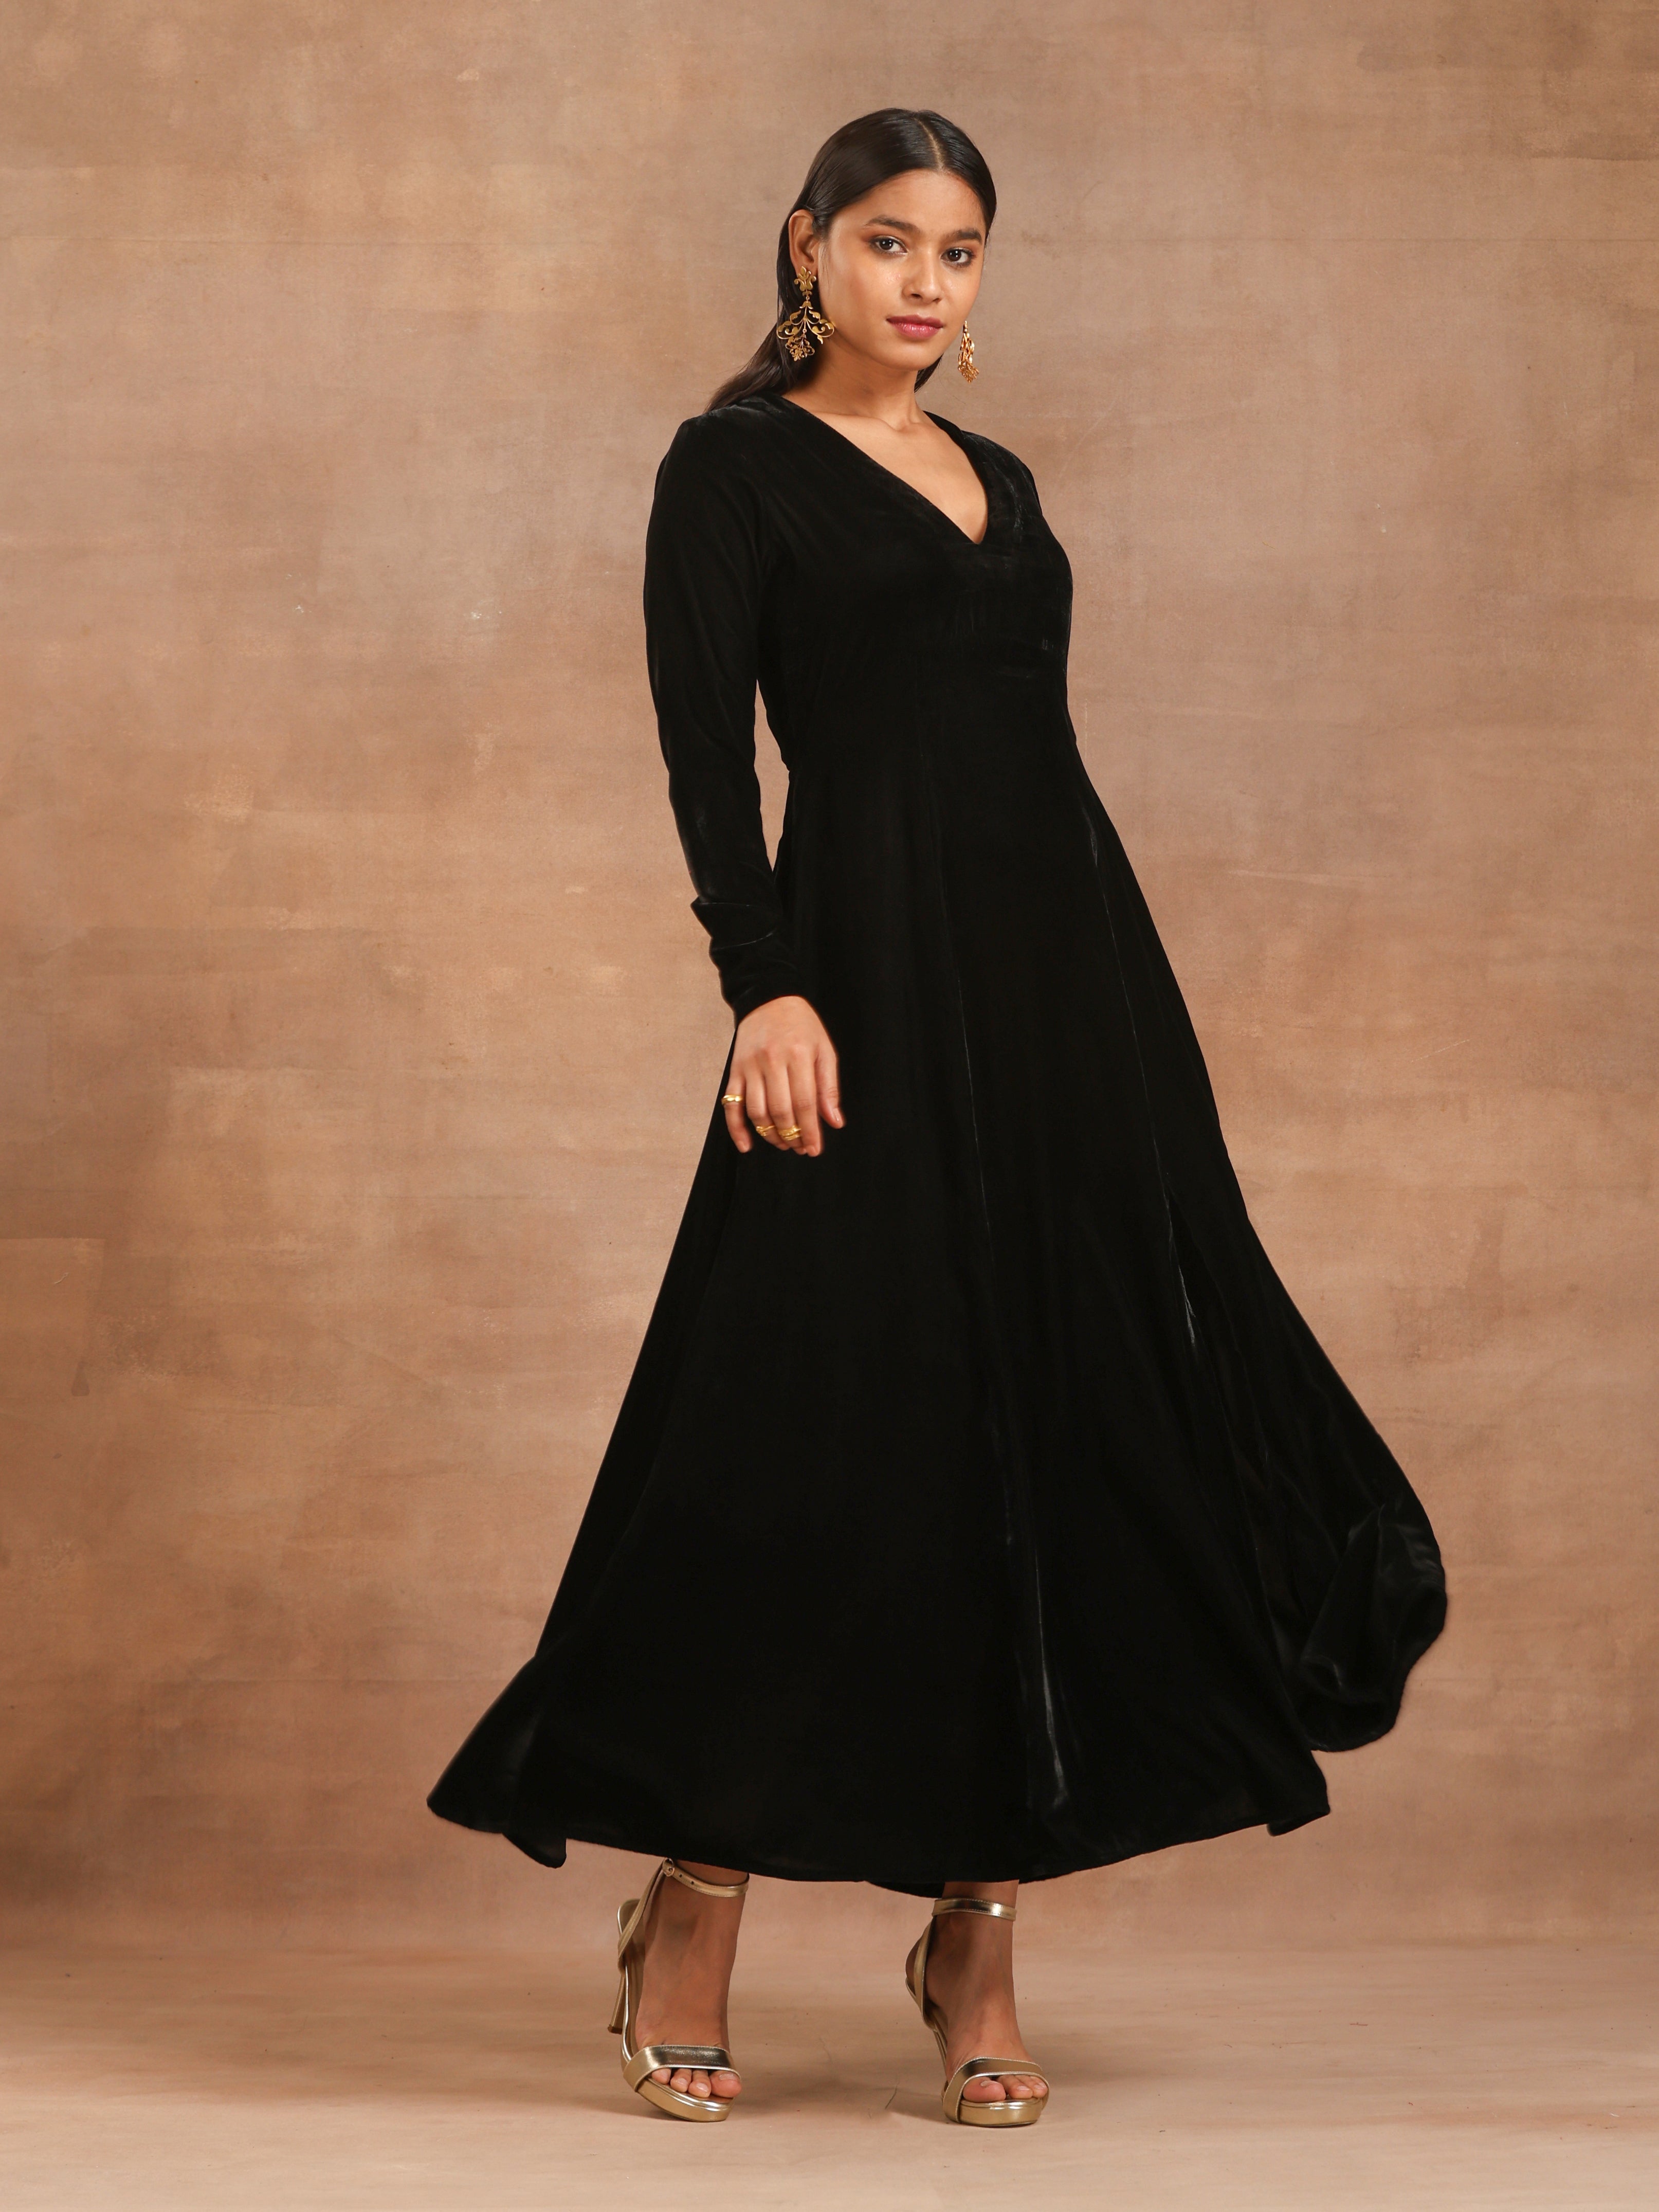 Black velvet dress with crystals embroidered neckline